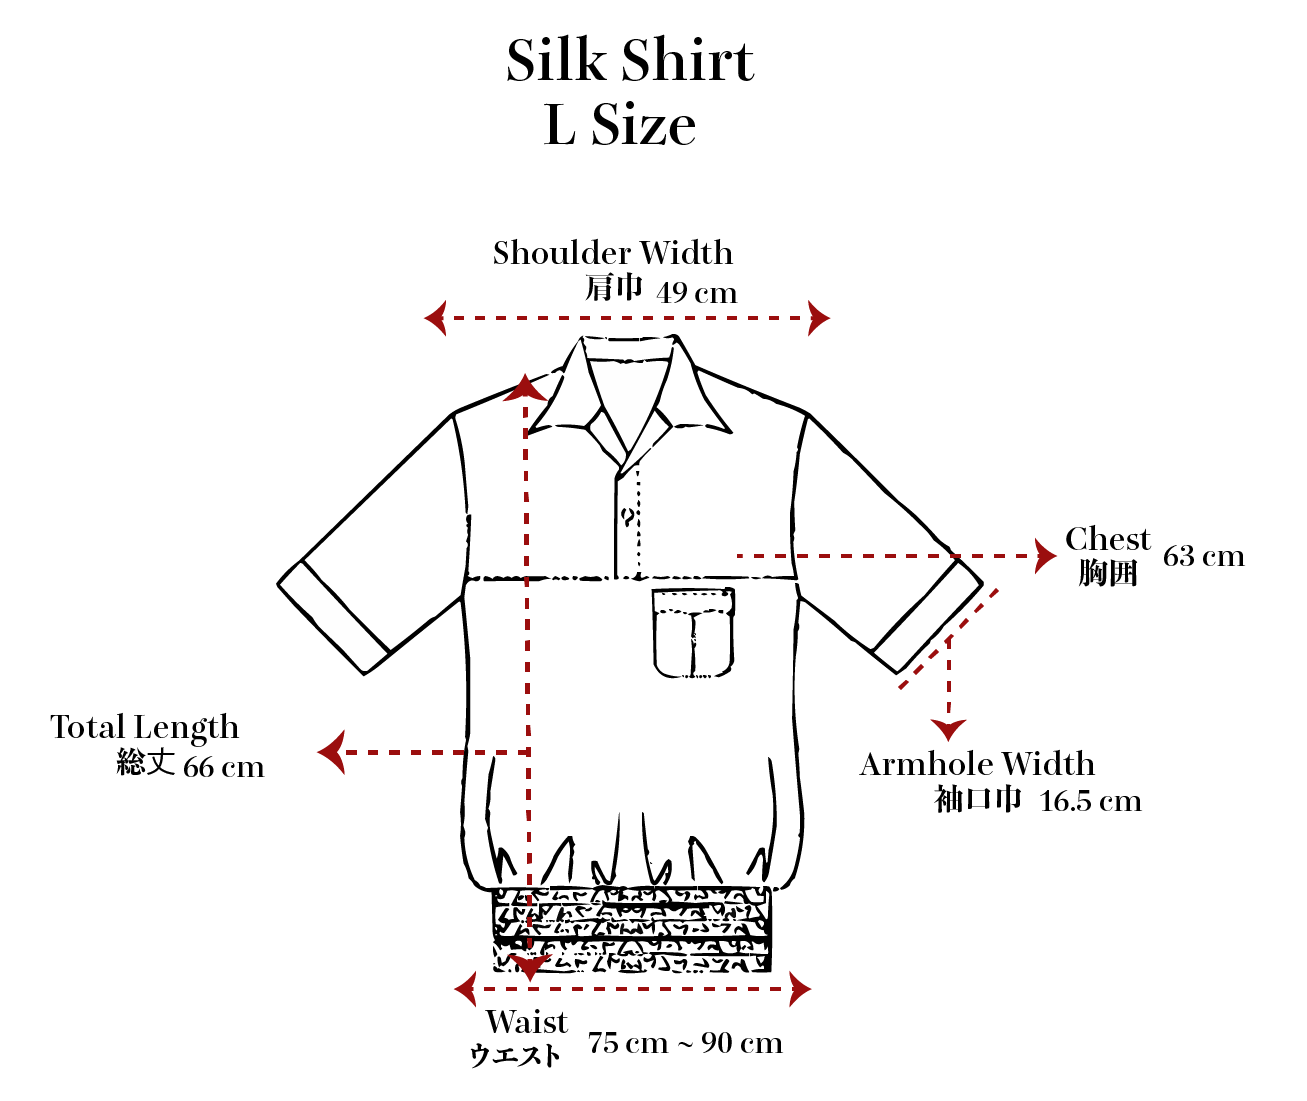 L Size Copper Silk Shirt (No. 12/100)